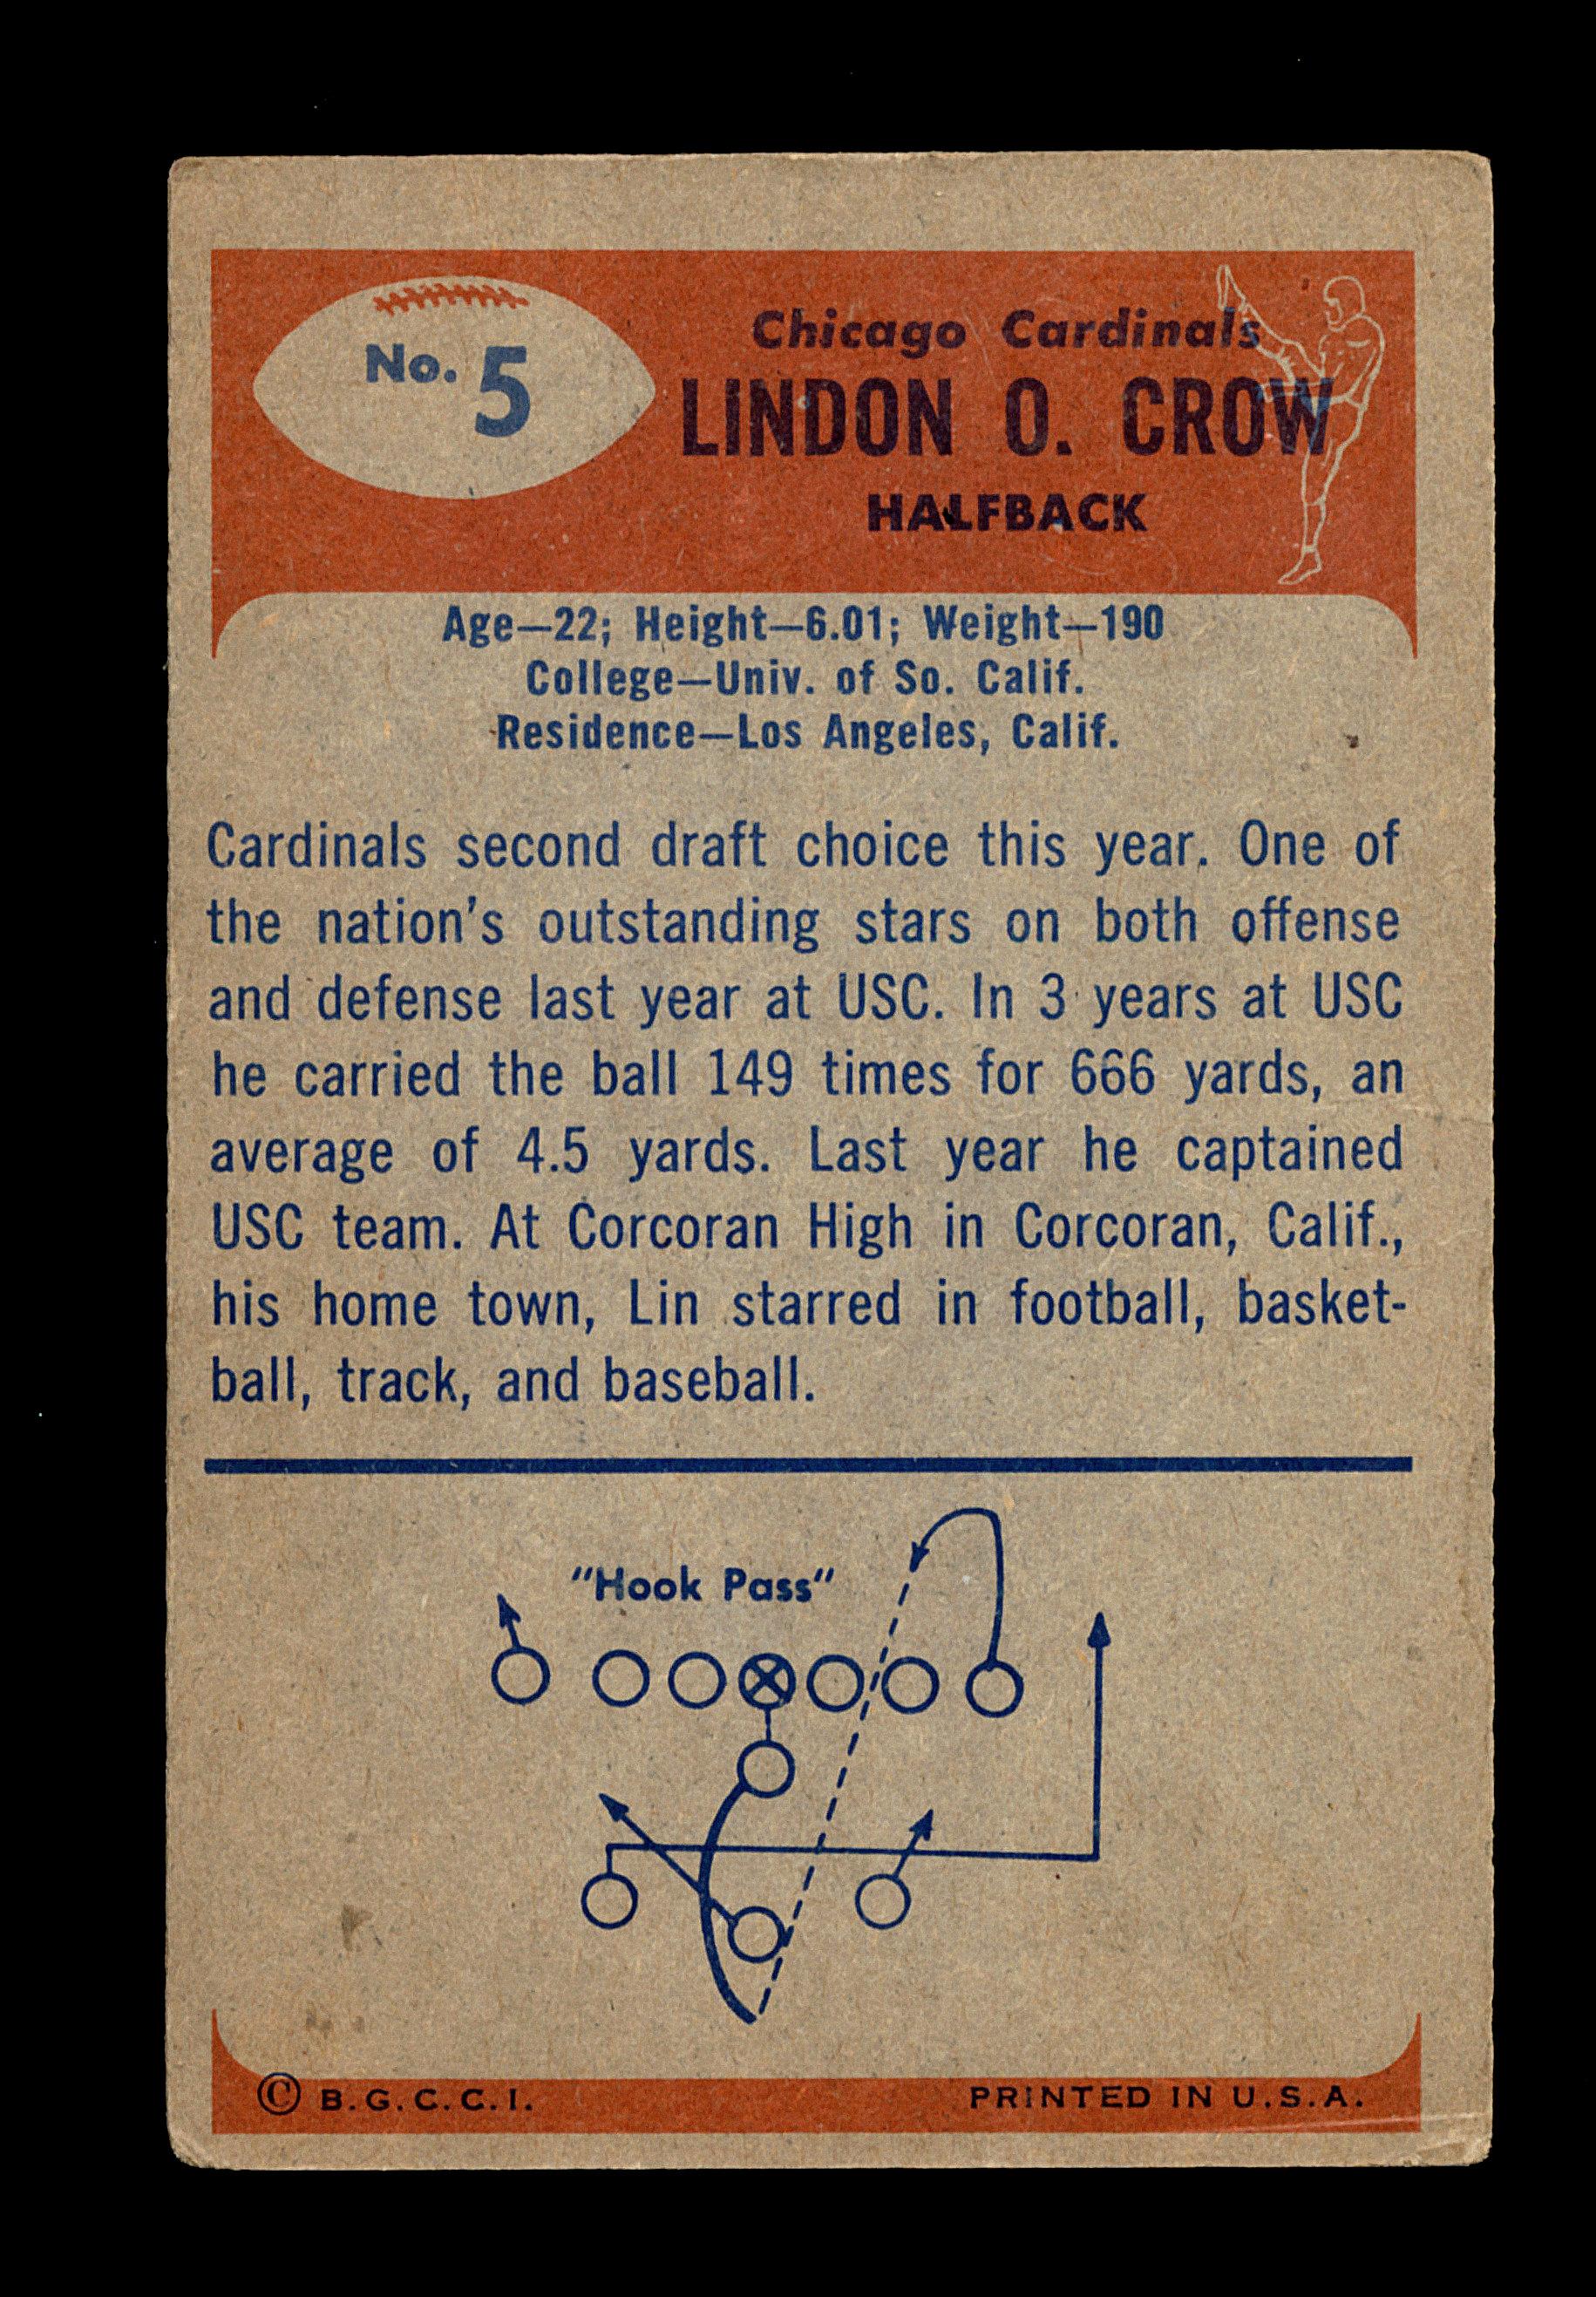 1955 Bowman Football Card #5 London Crow Chicago Cardinals.